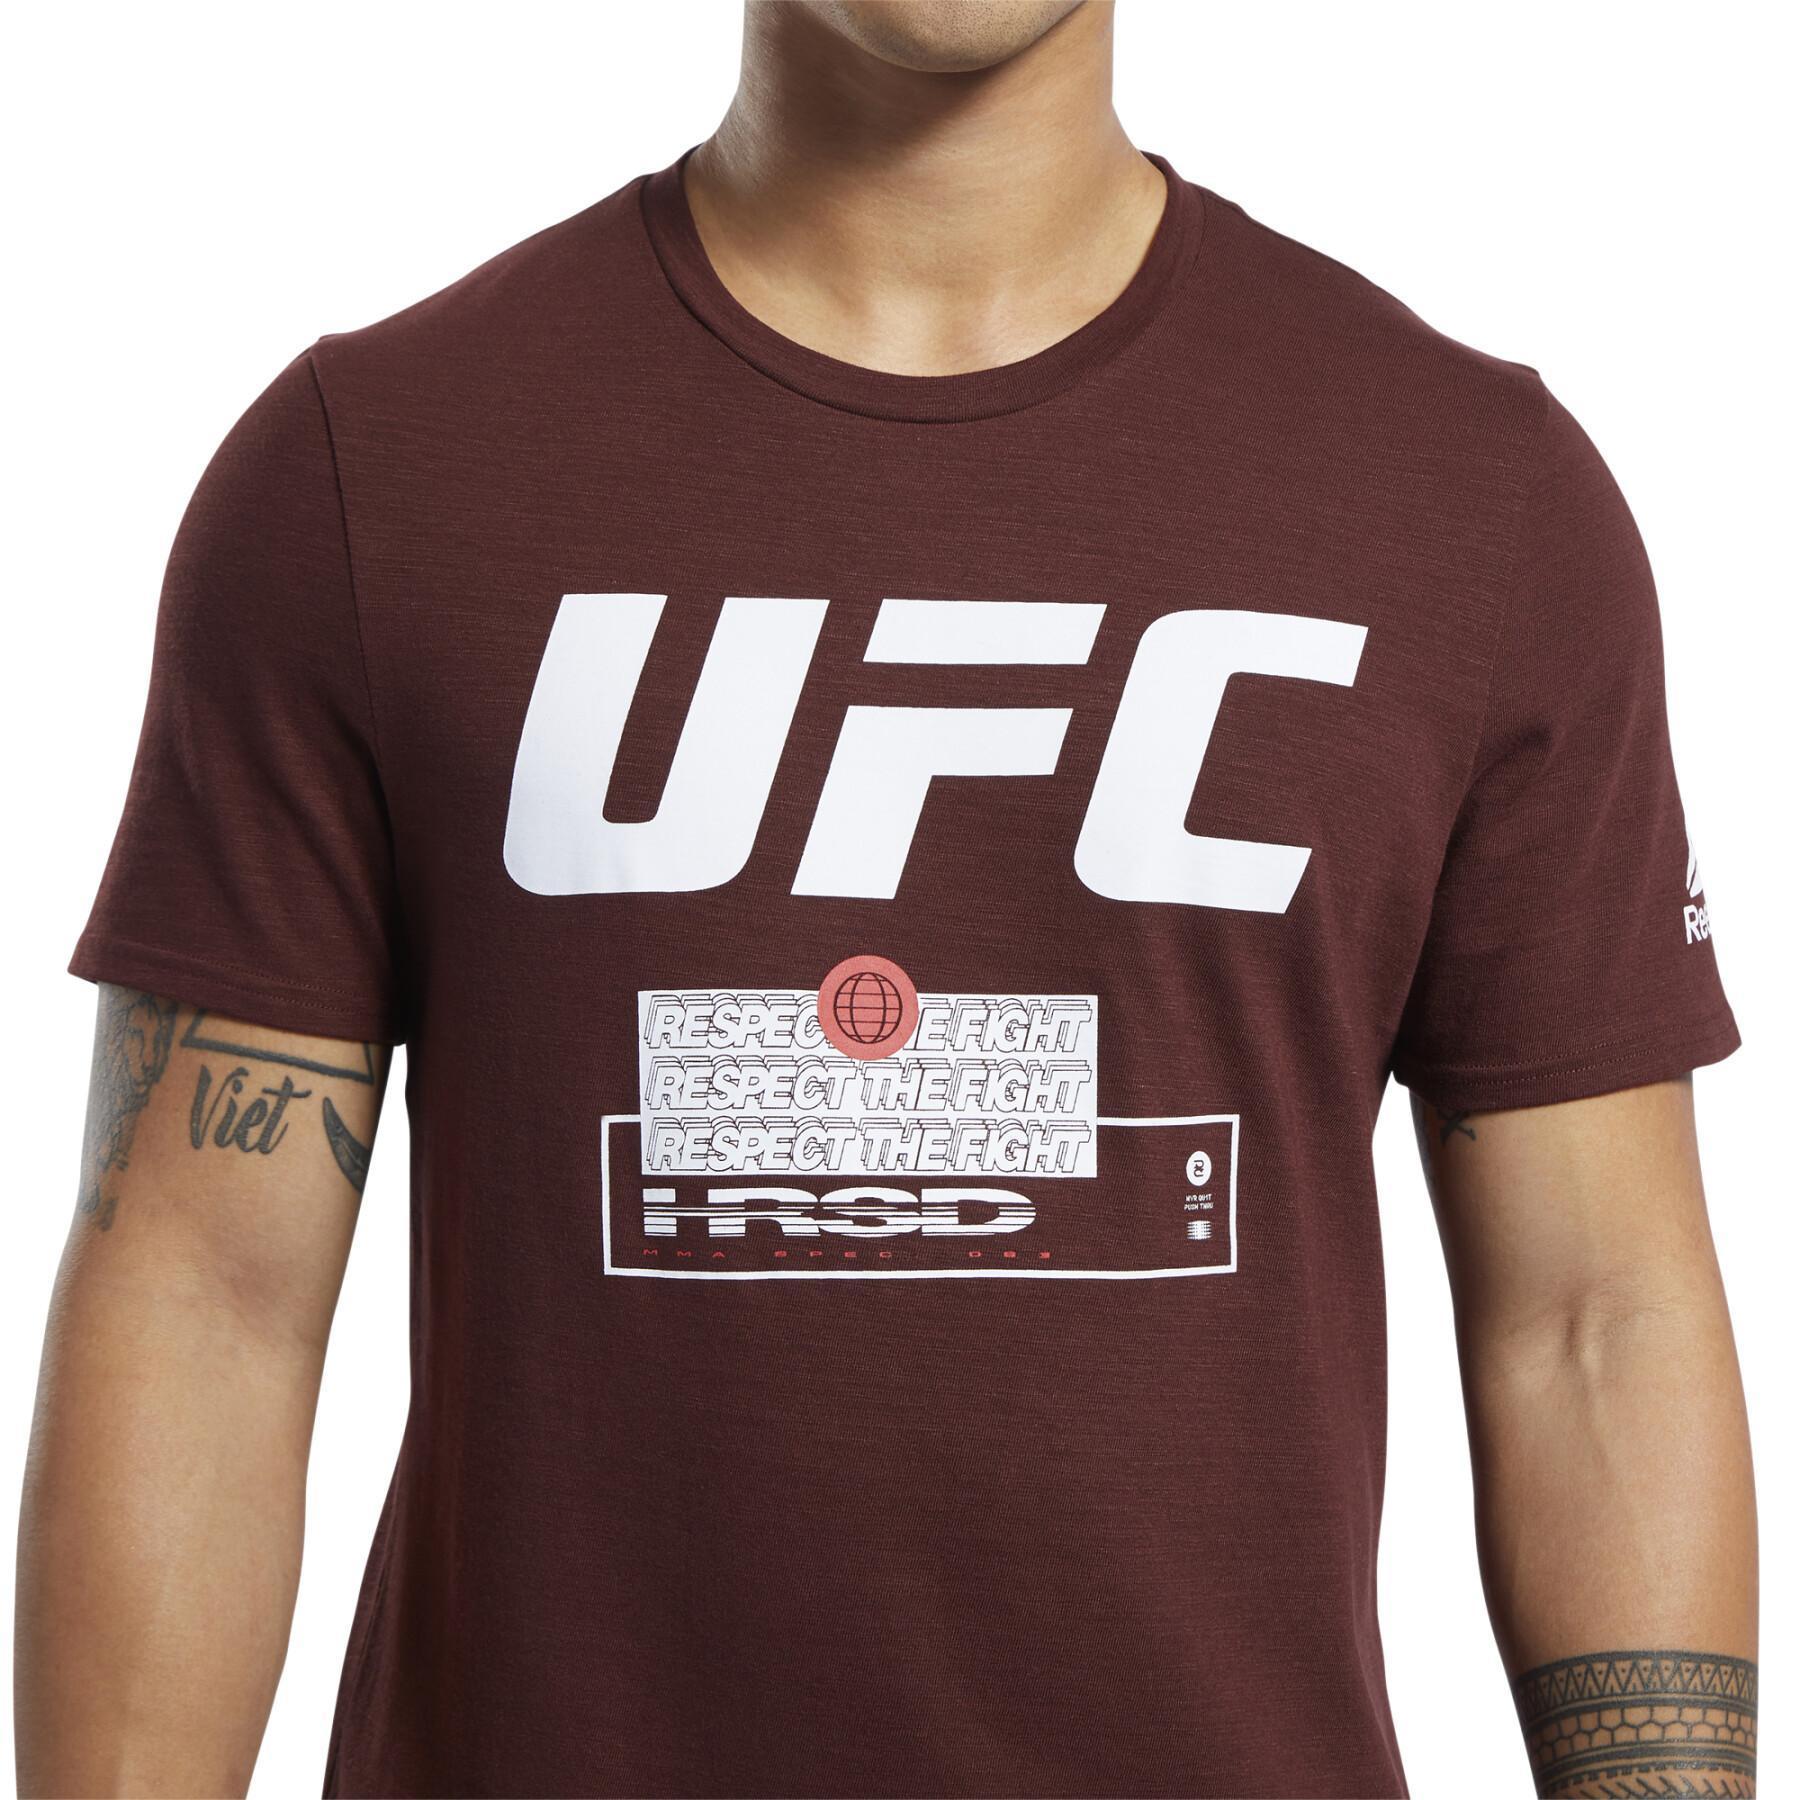 Camiseta Reebok UFC FG Fight Week